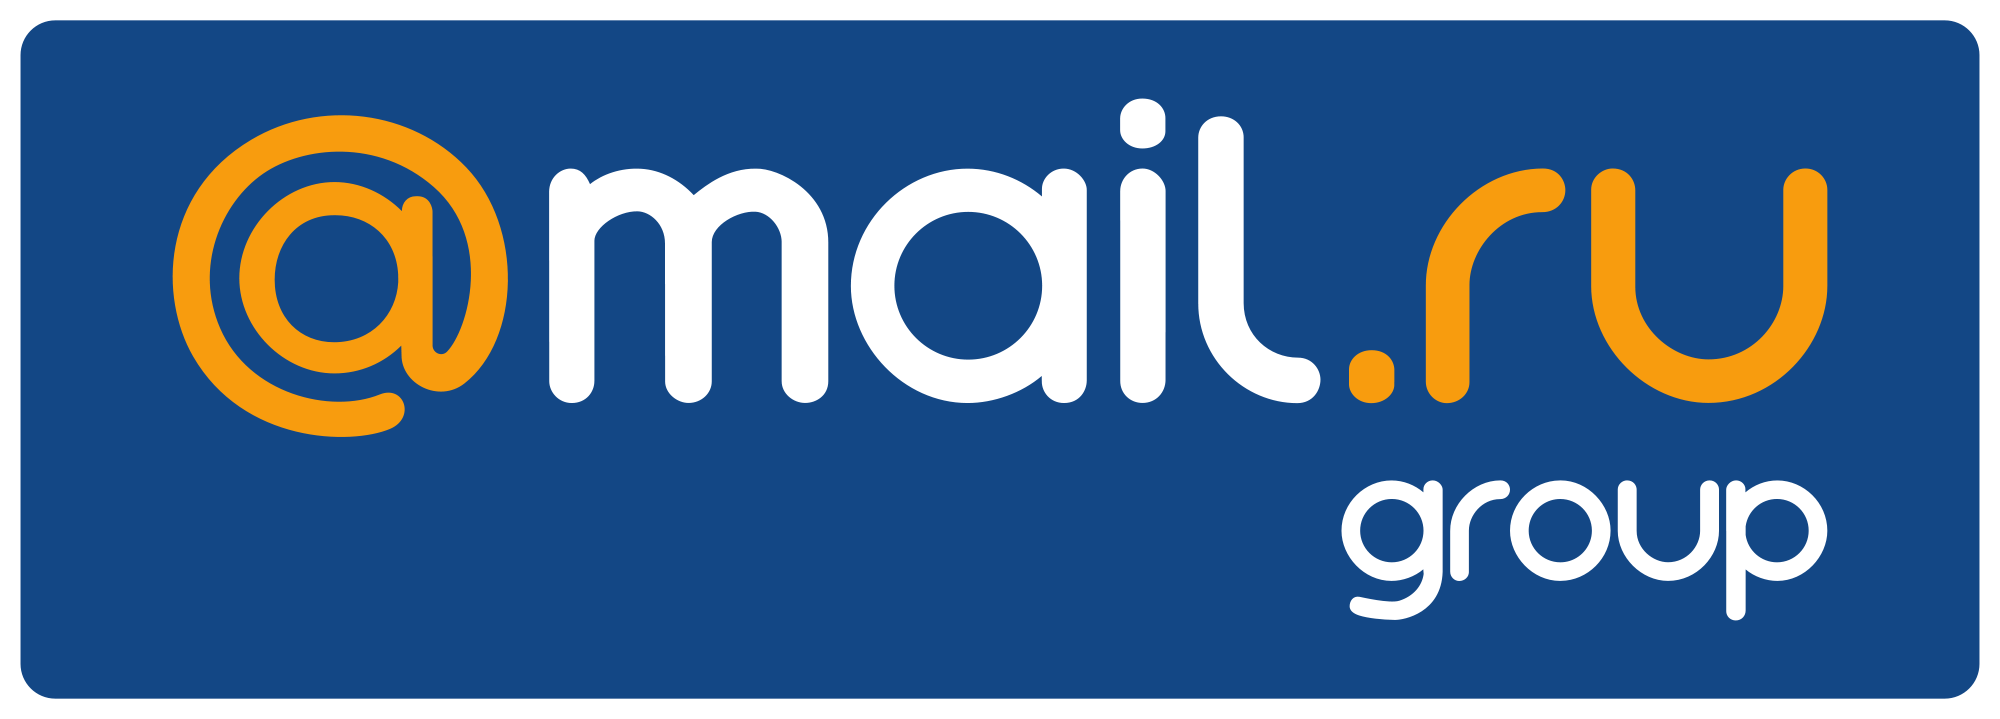 Mail.ru логотип. Поисковик майл.ру. Почта майл ру. Поисковая система майл ру.